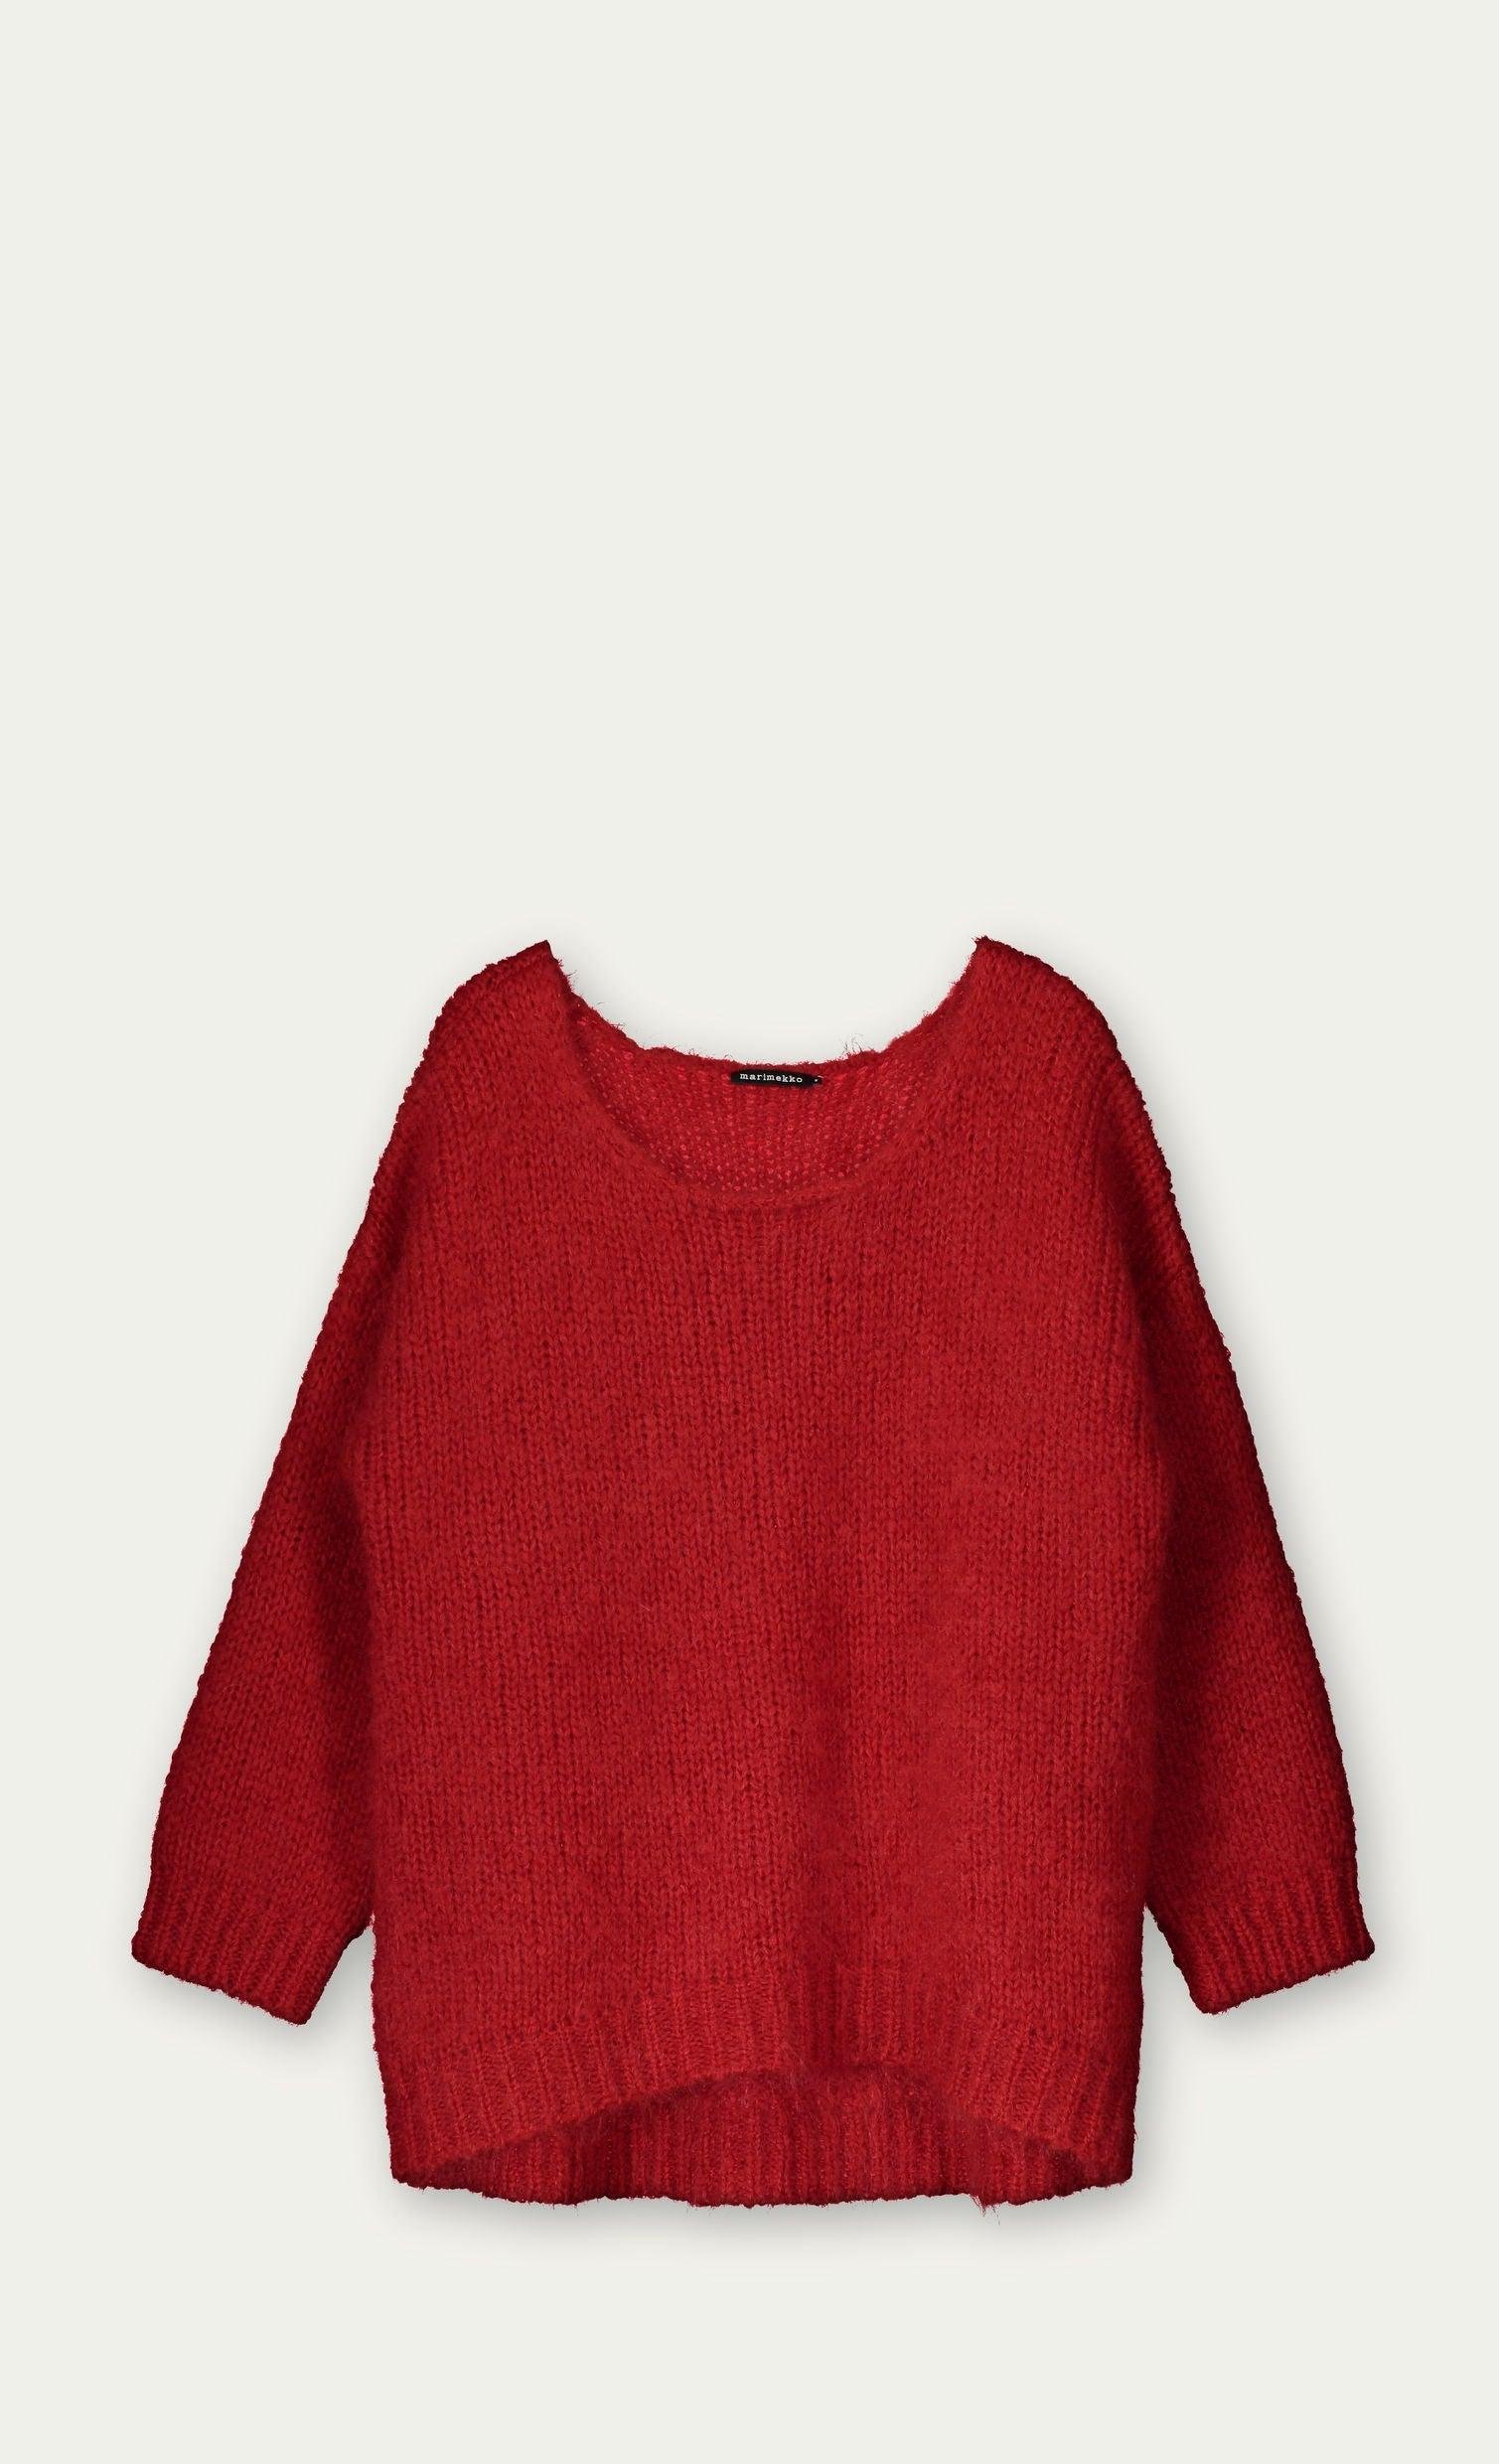 Solid Atelina Mohair Knit Sweater by MARIMEKKO